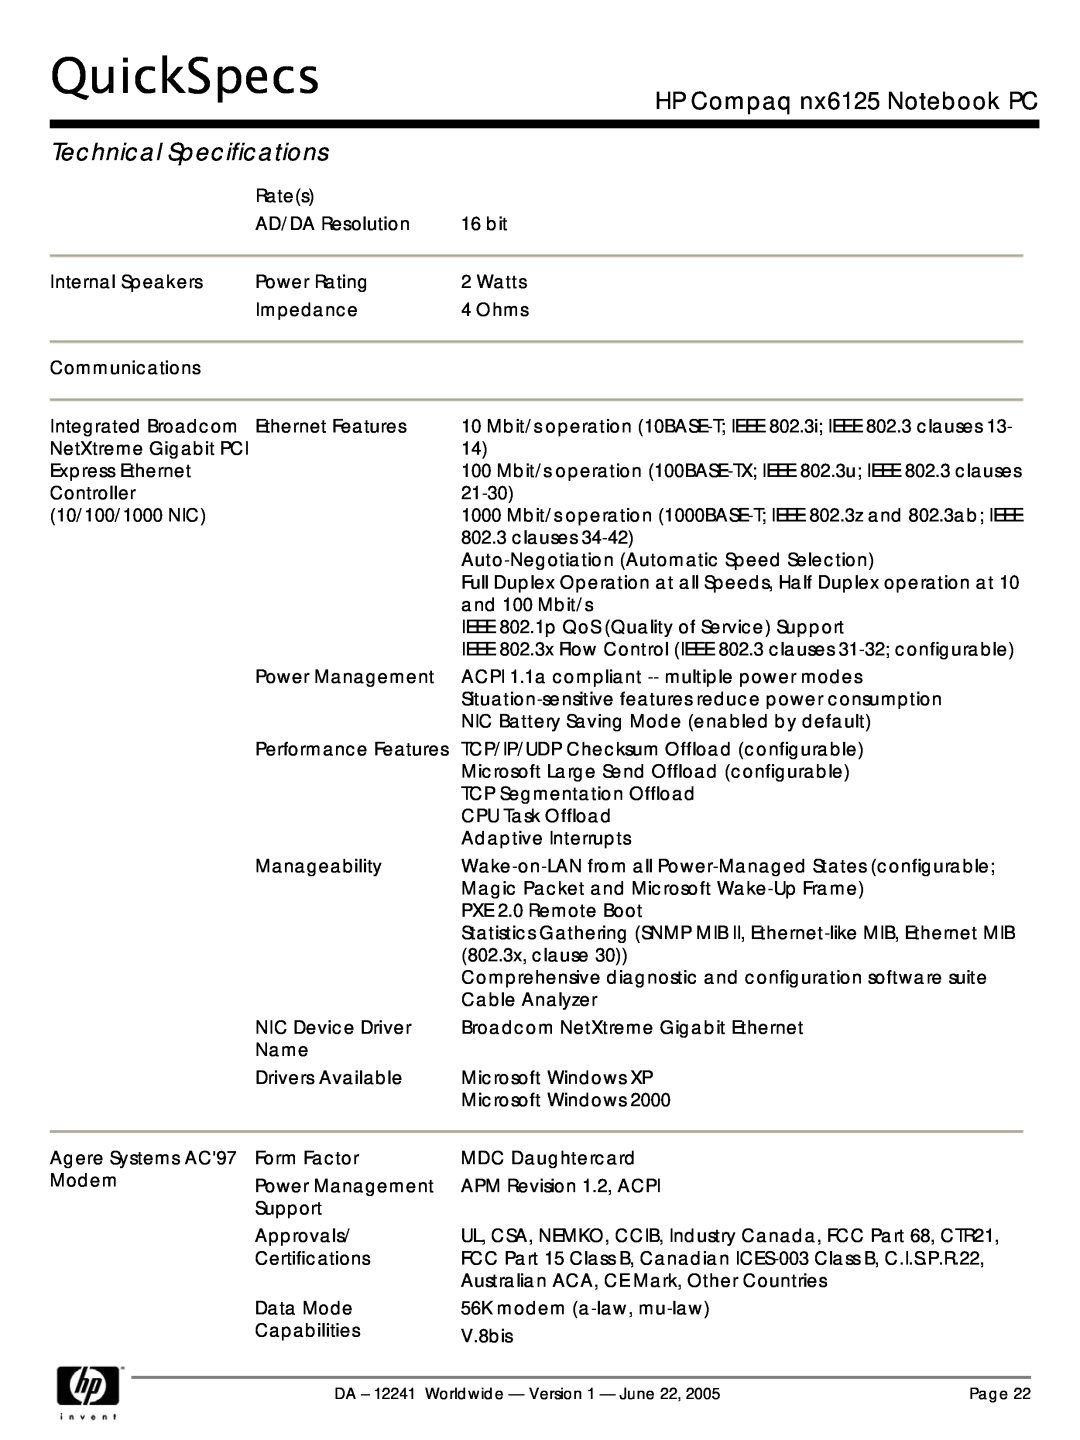 AMD DA - 12241 manual QuickSpecs, HP Compaq nx6125 Notebook PC, Technical Specifications, 16 bit 